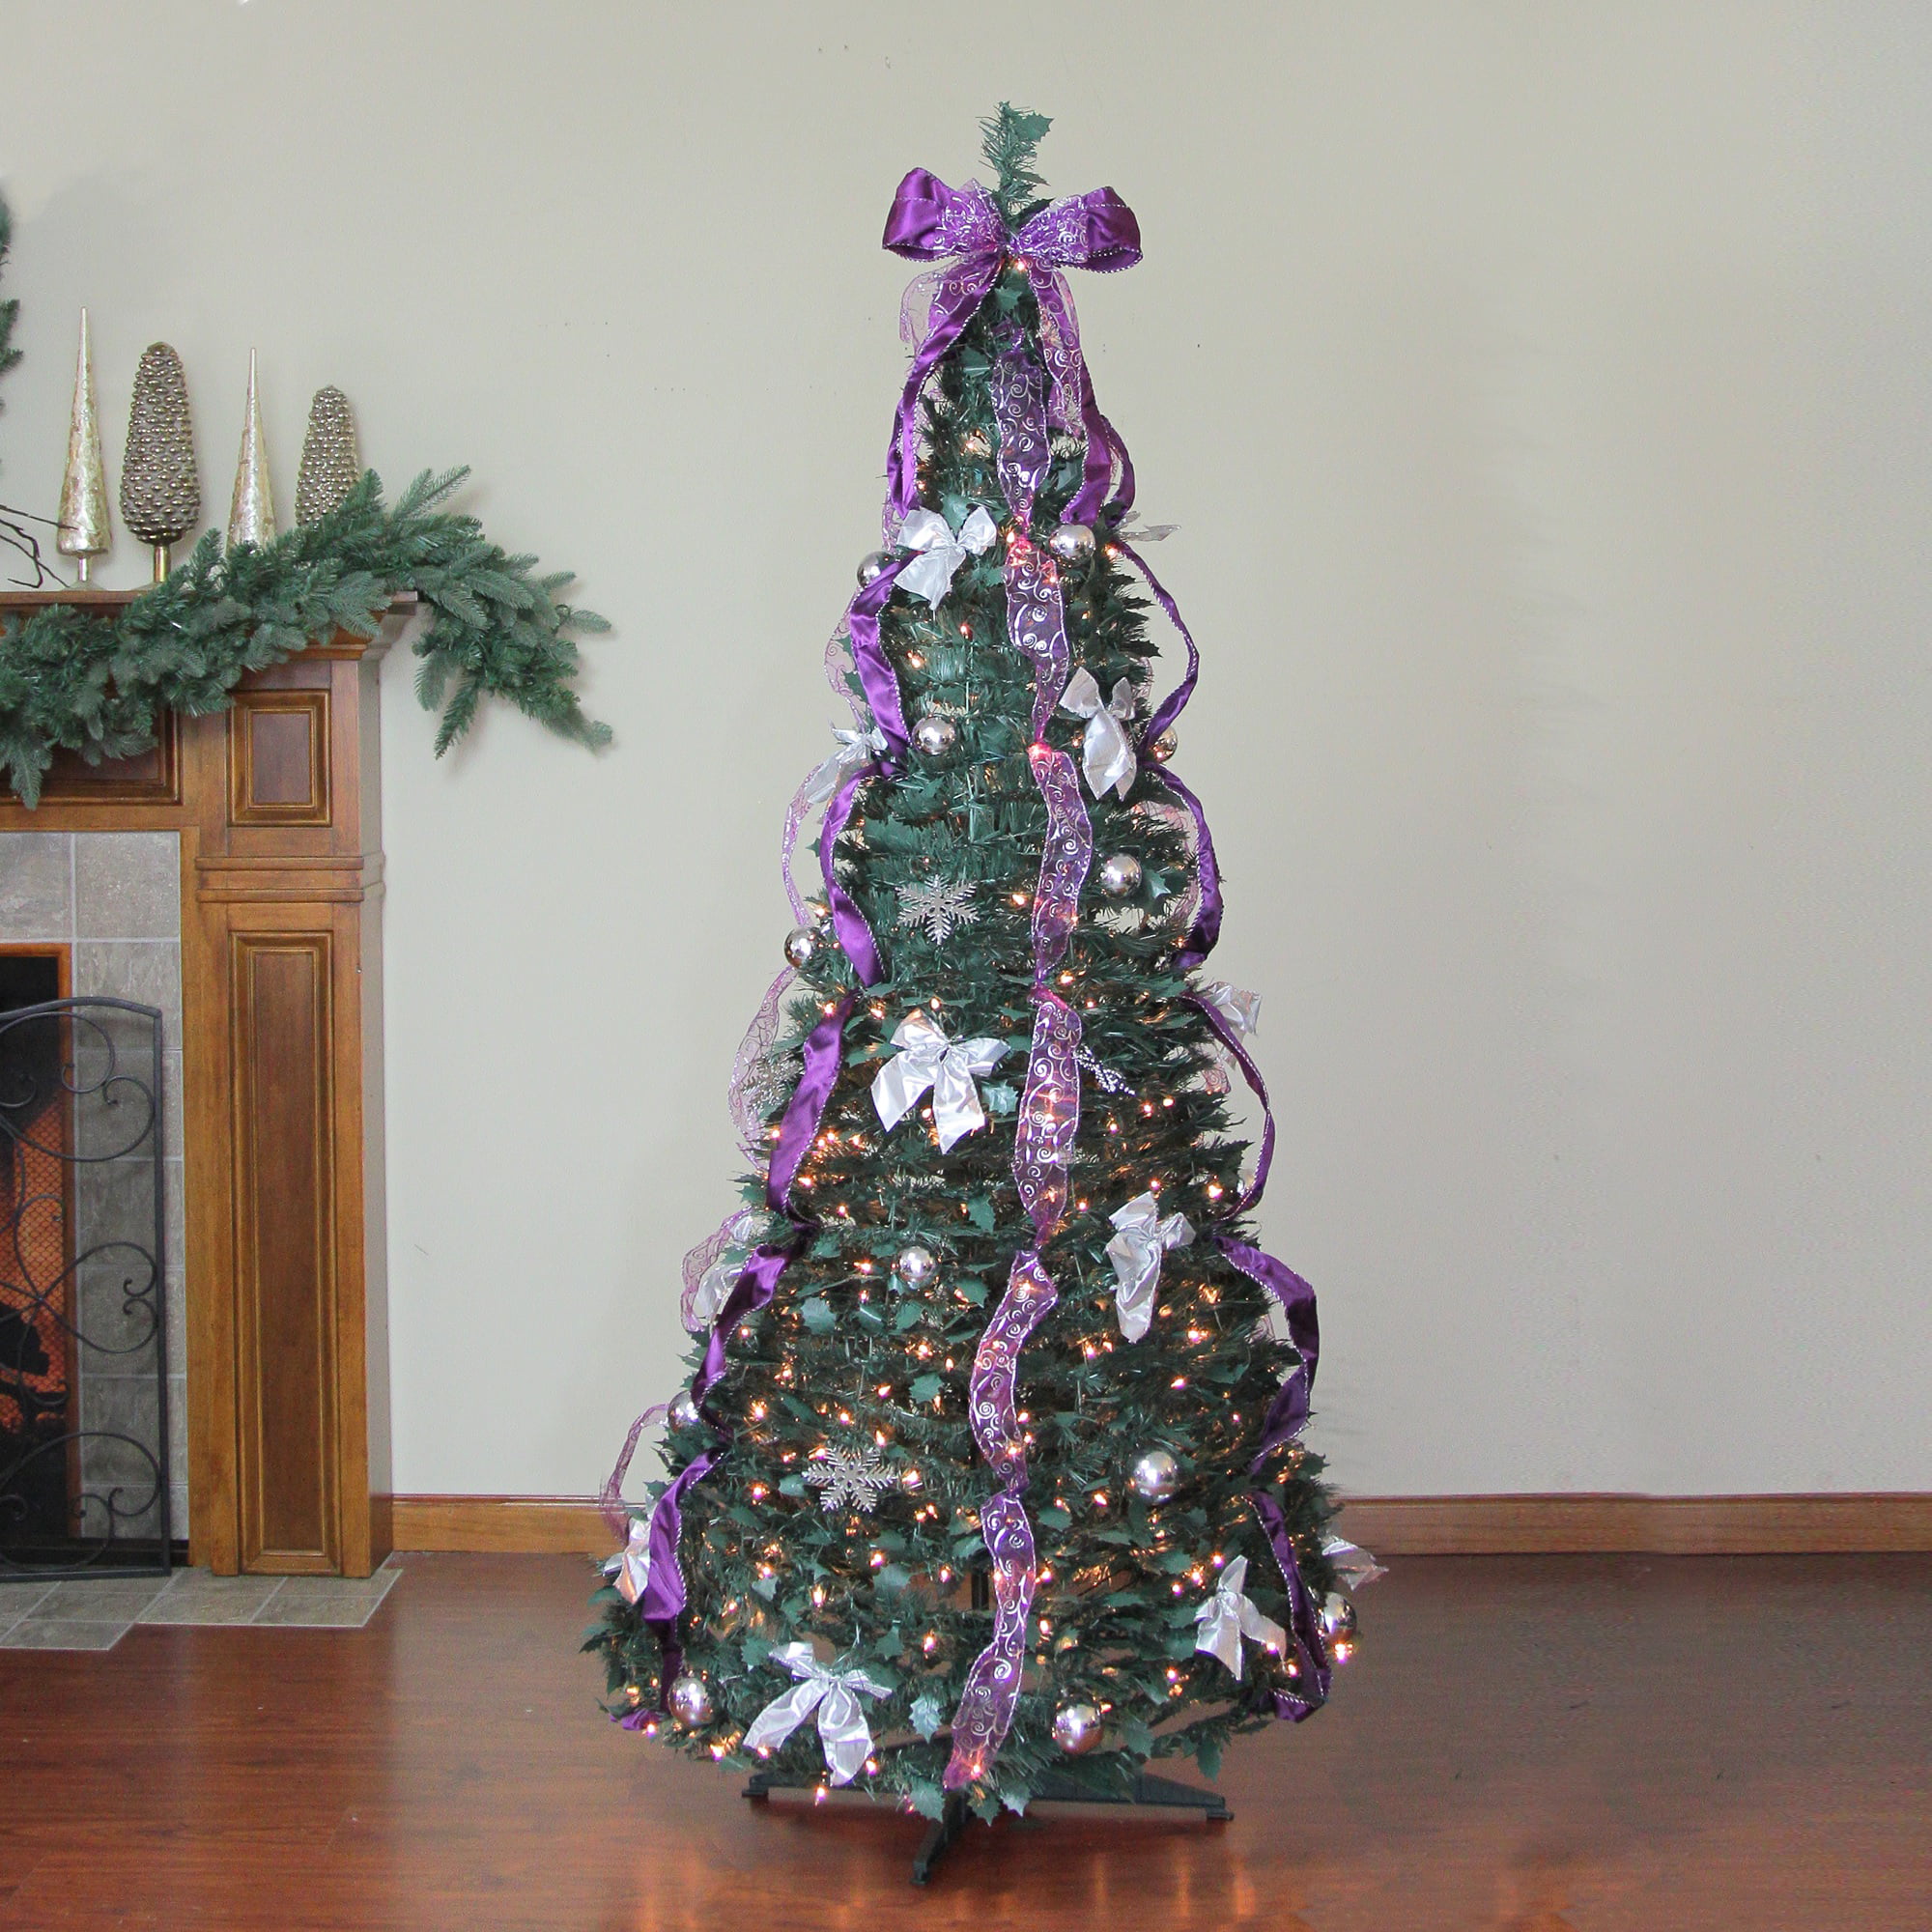 Northlight 2' Pre-lit White Iridescent Pine Artificial Christmas Tree -  Purple Lights, 1 - Kroger